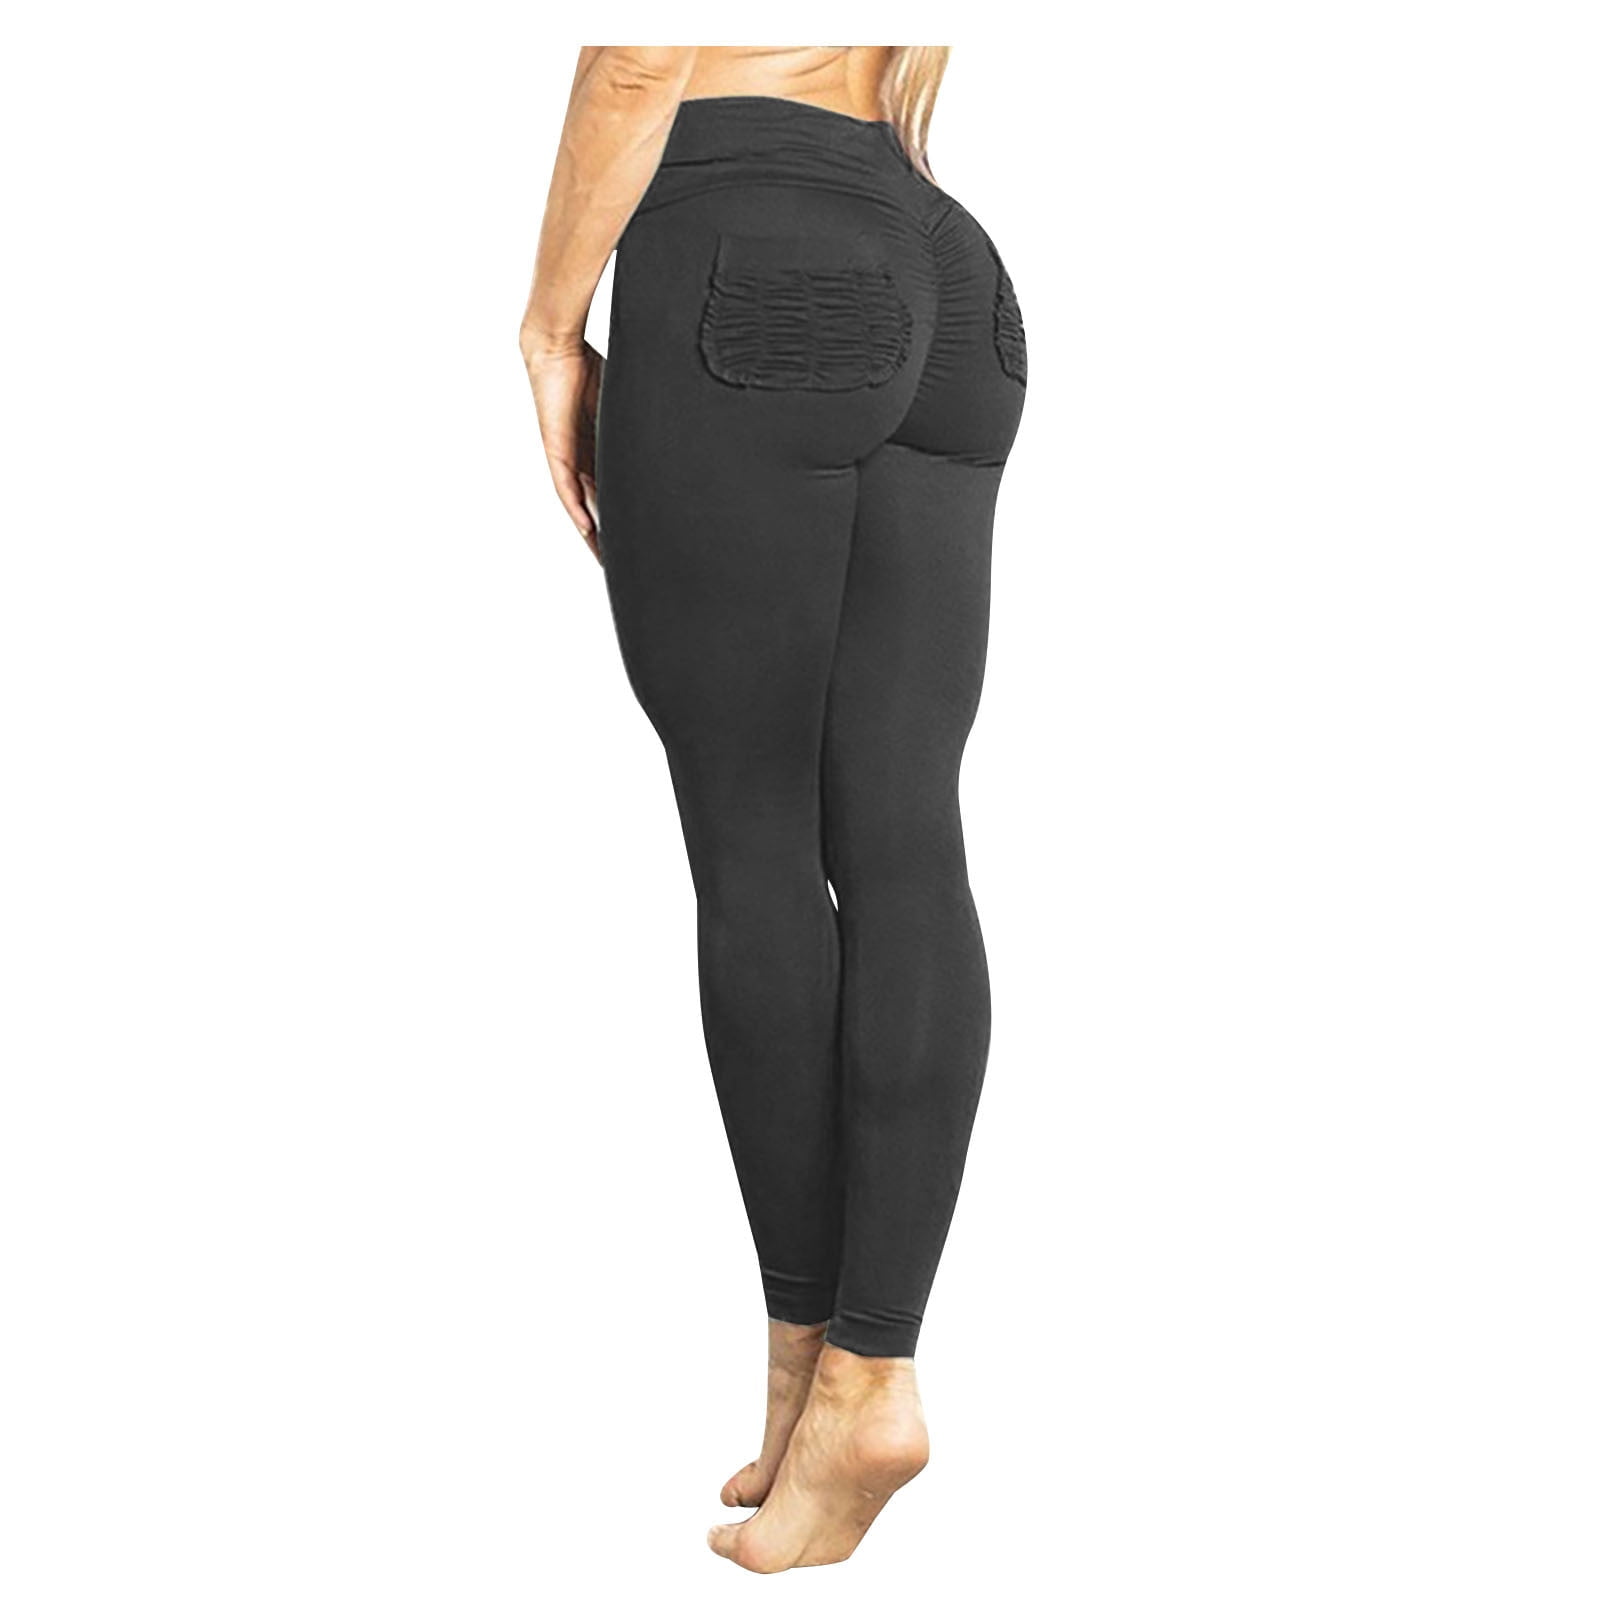 adviicd Petite Yoga Pants For Women Yoga Clothes Women's Seamless